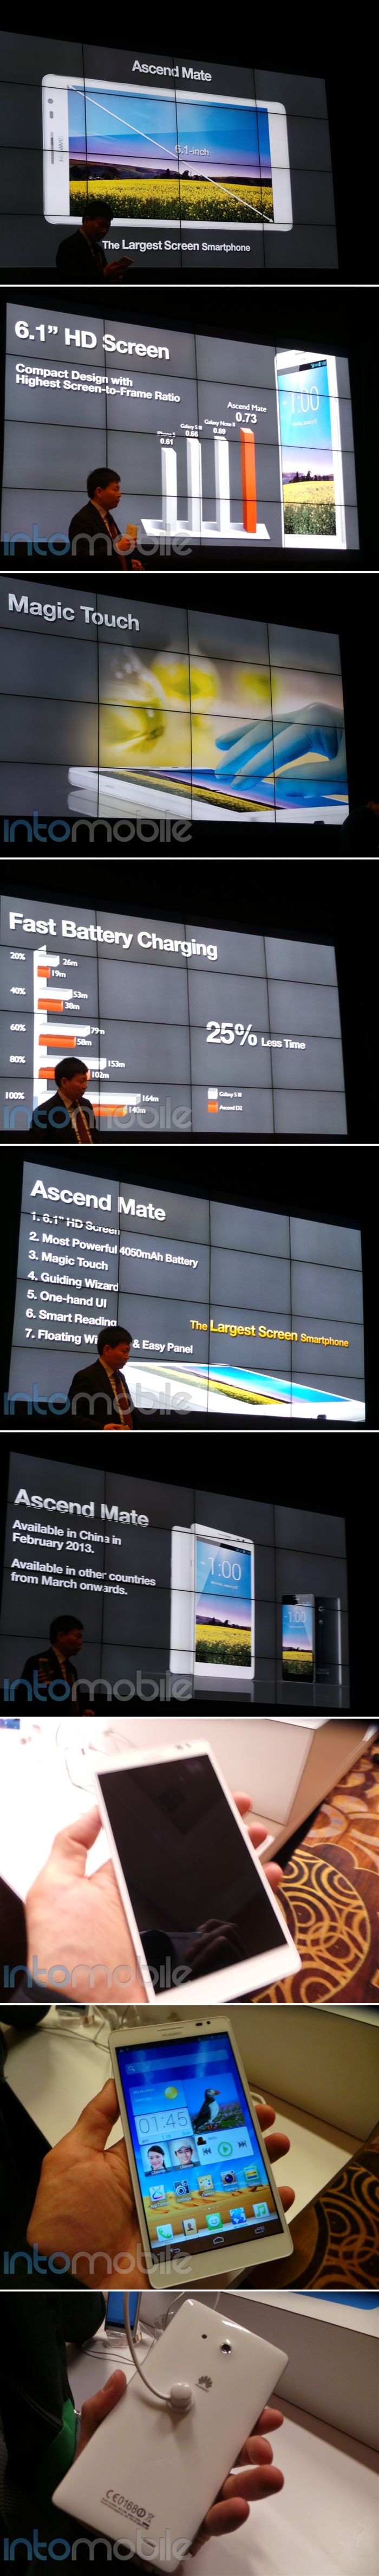 Huawei Ascend Mate: 6.1 col, mi lesz itt még?